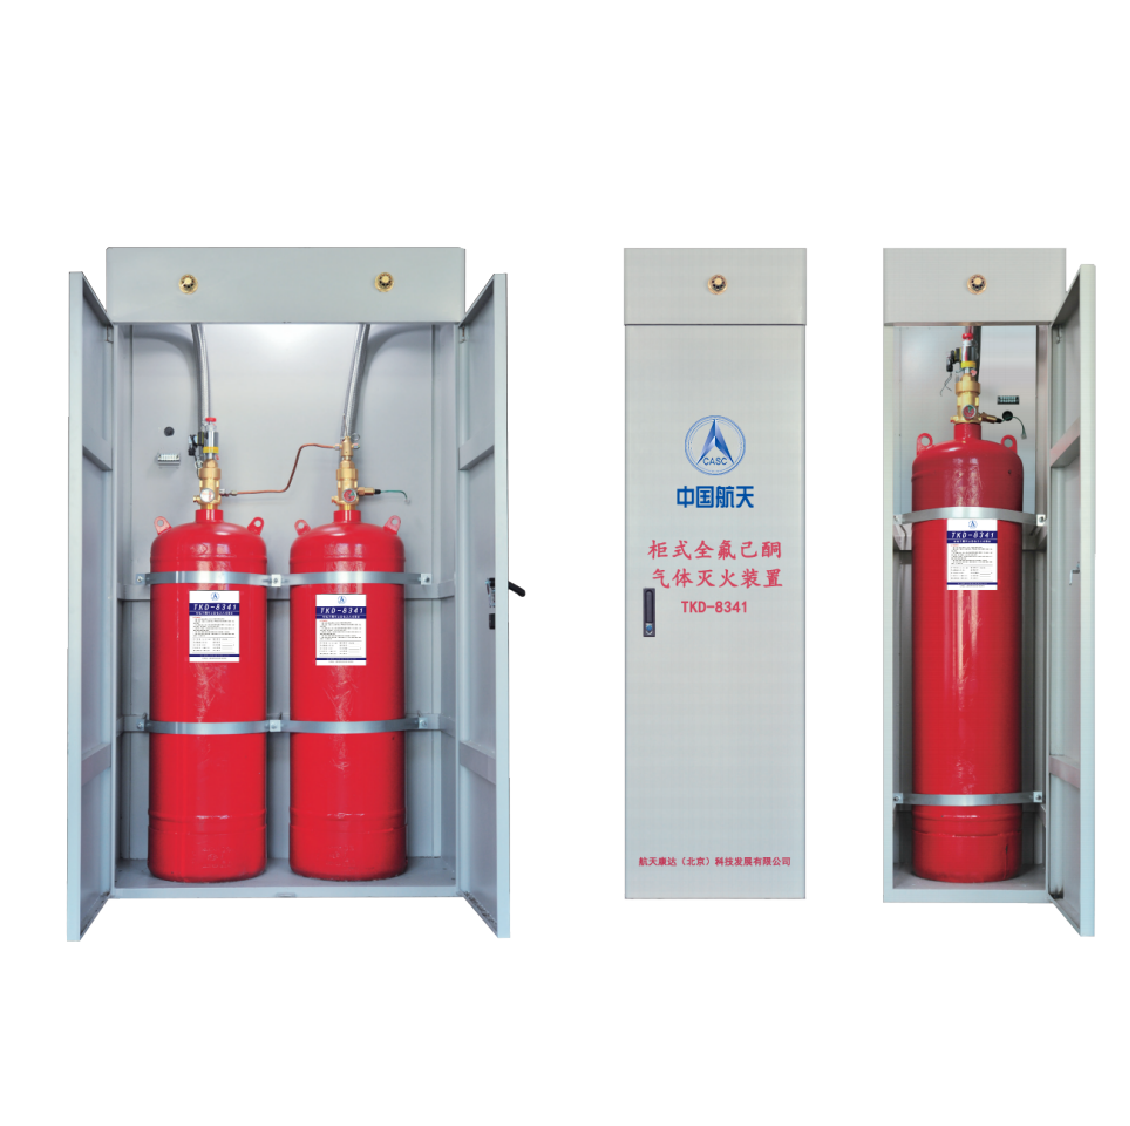 Cabinet type perfluorohexanone fire extinguishing system